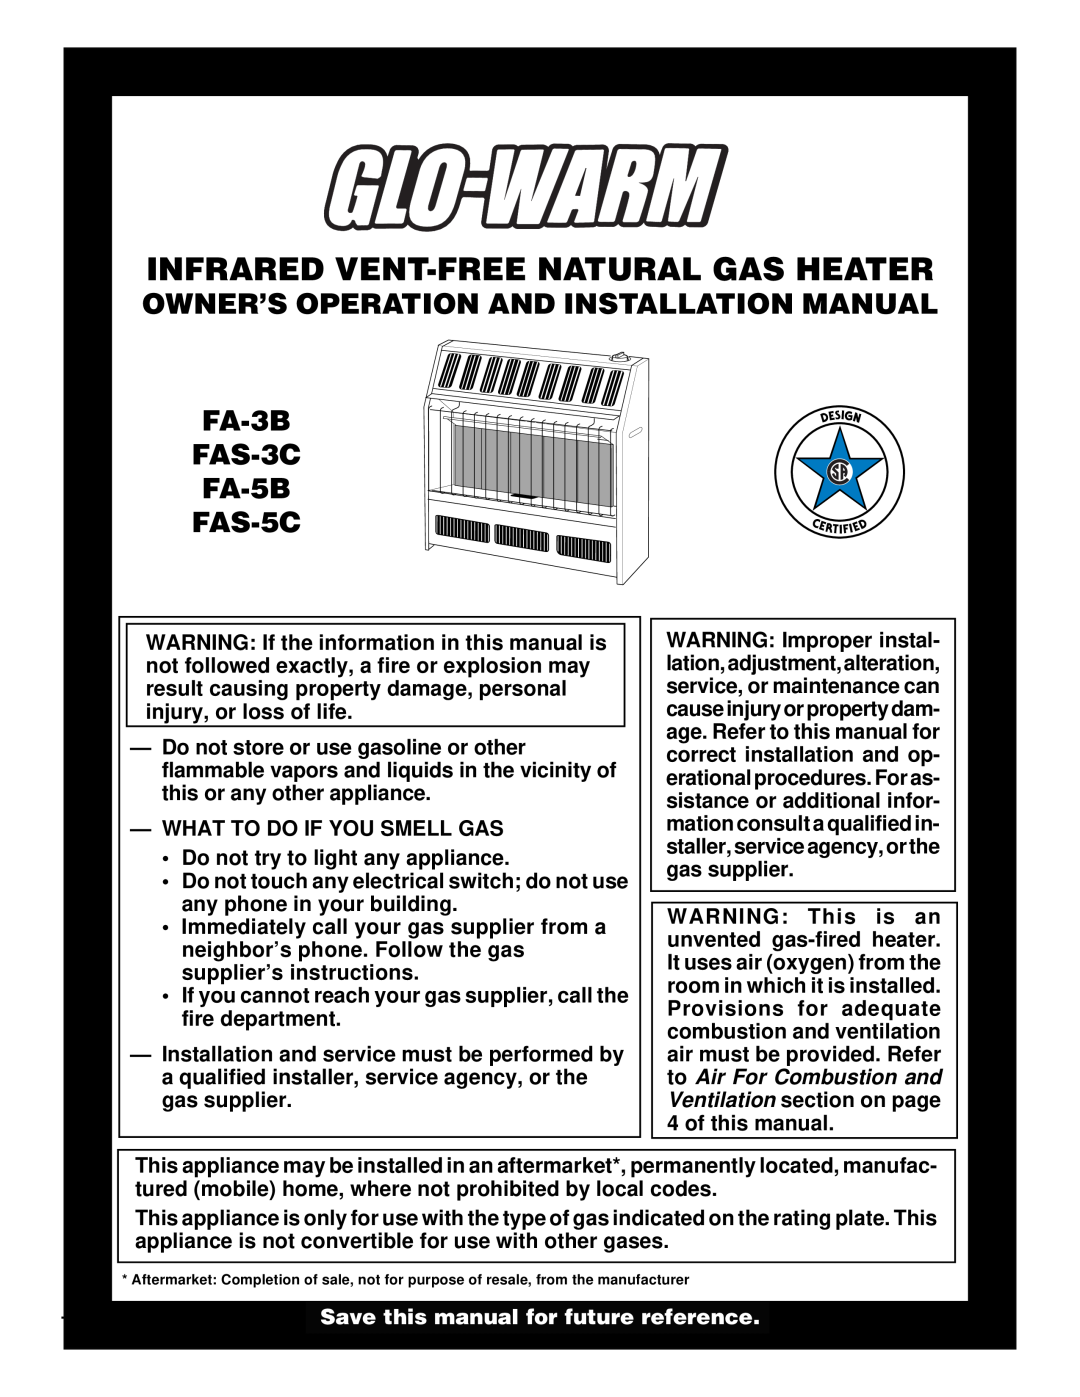 Desa FA-5B installation manual Infrared Vent-Freenatural Gas Heater, OWNER’S OPERATION AND INSTALLATION MANUAL FA-3B 